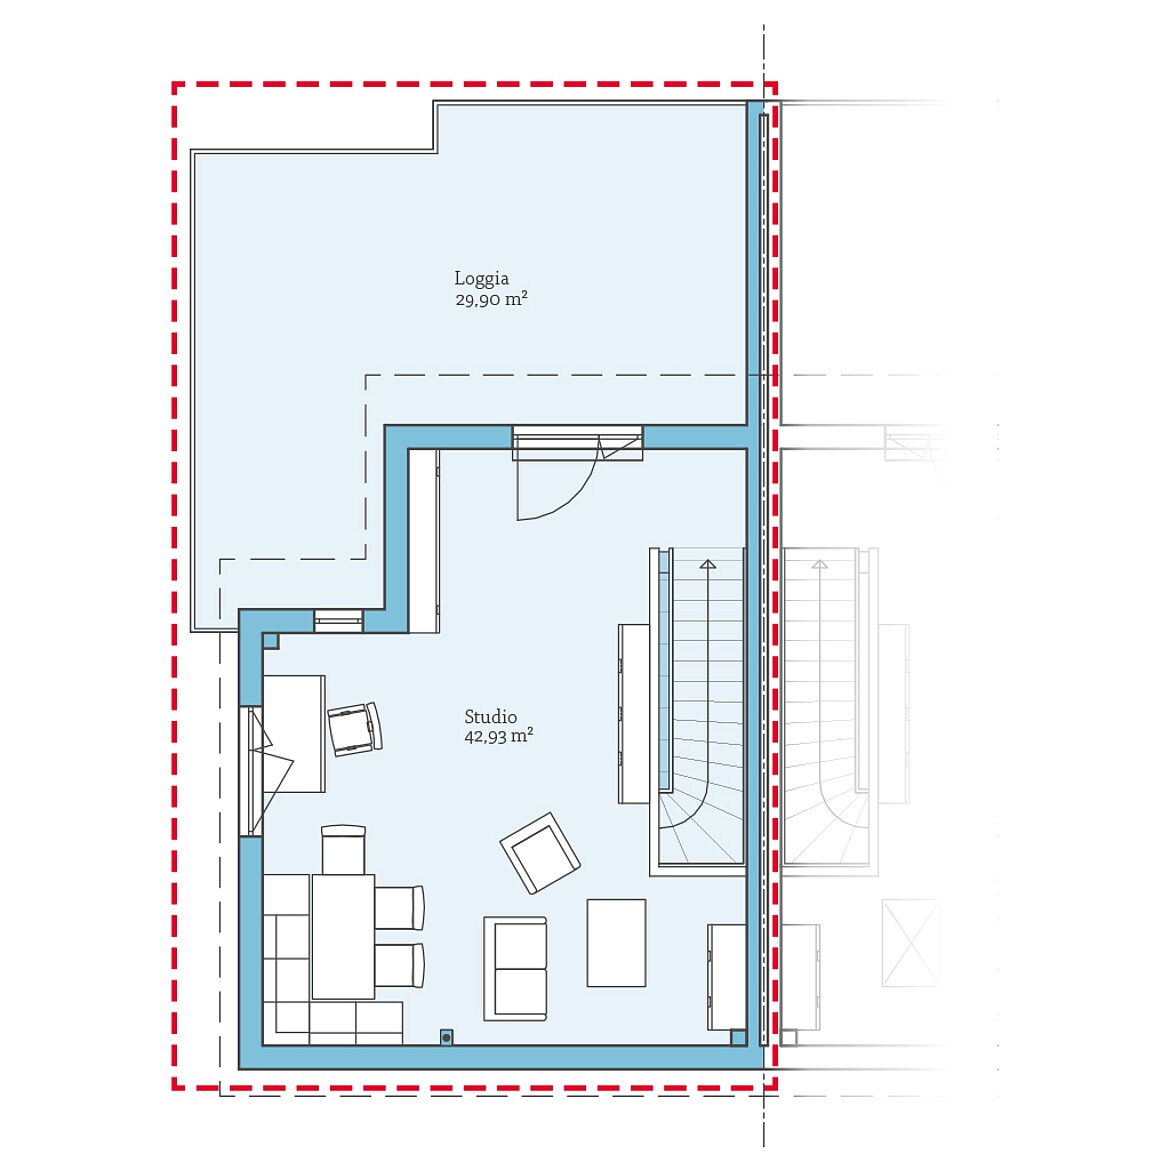 Prefabricated semi-detached house 144: Top floor plan option